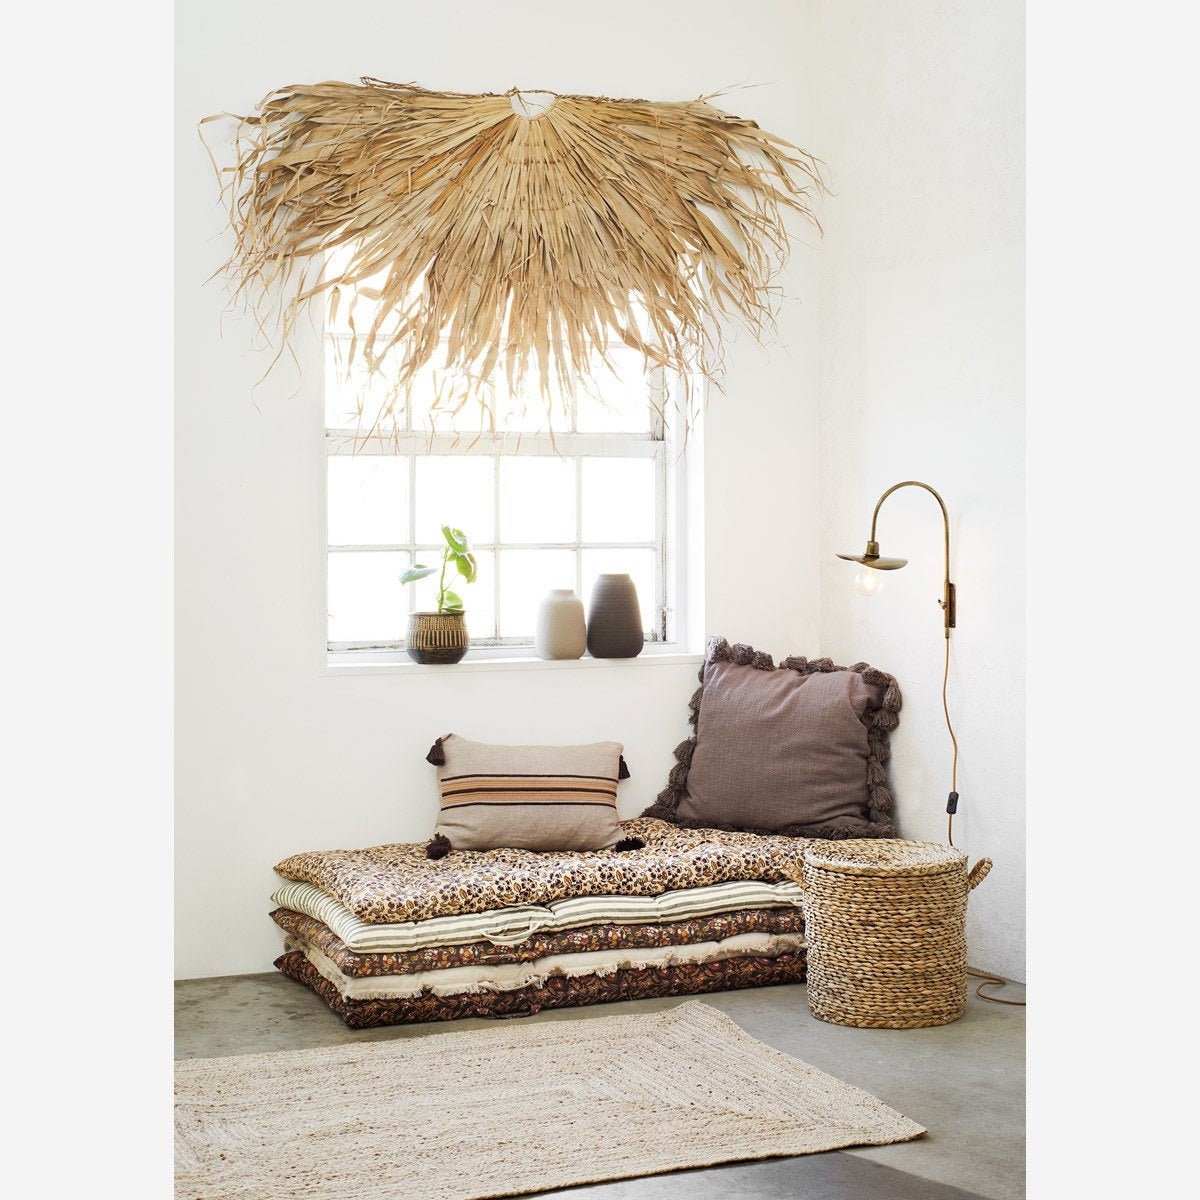 Handmade Natural Palm Wall Hanging - X Large